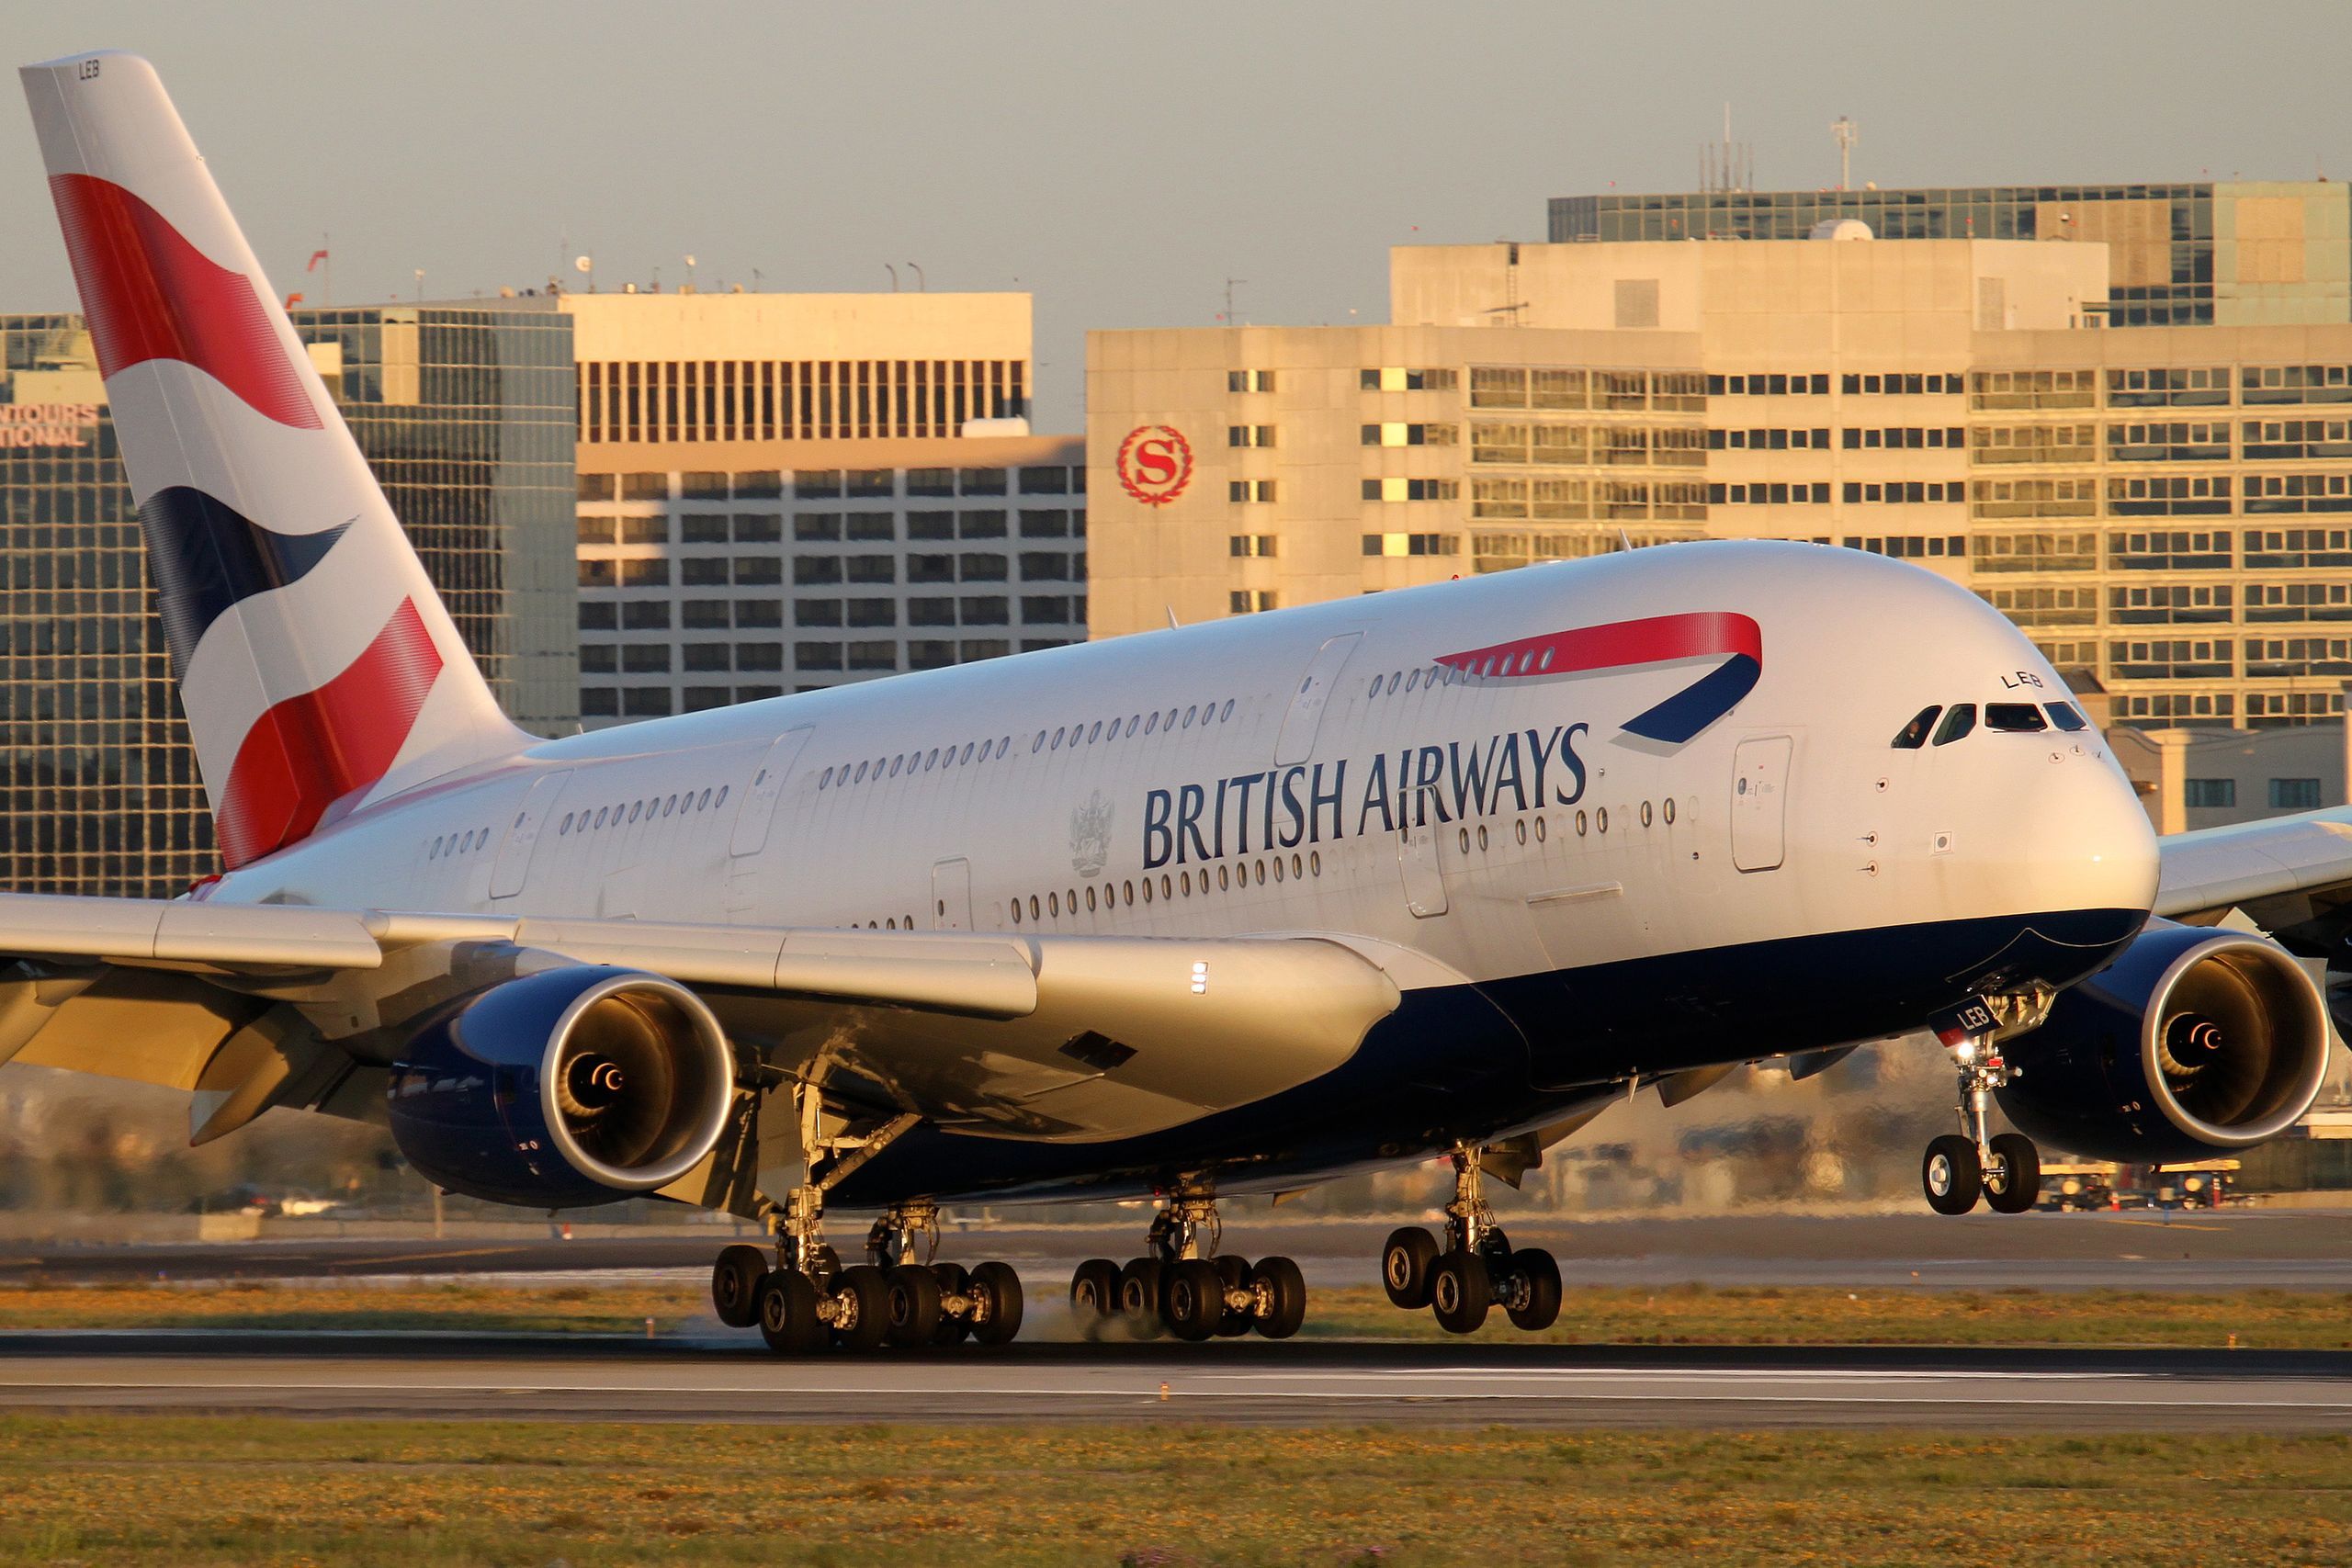 British Airways A380 landing at Los Angeles